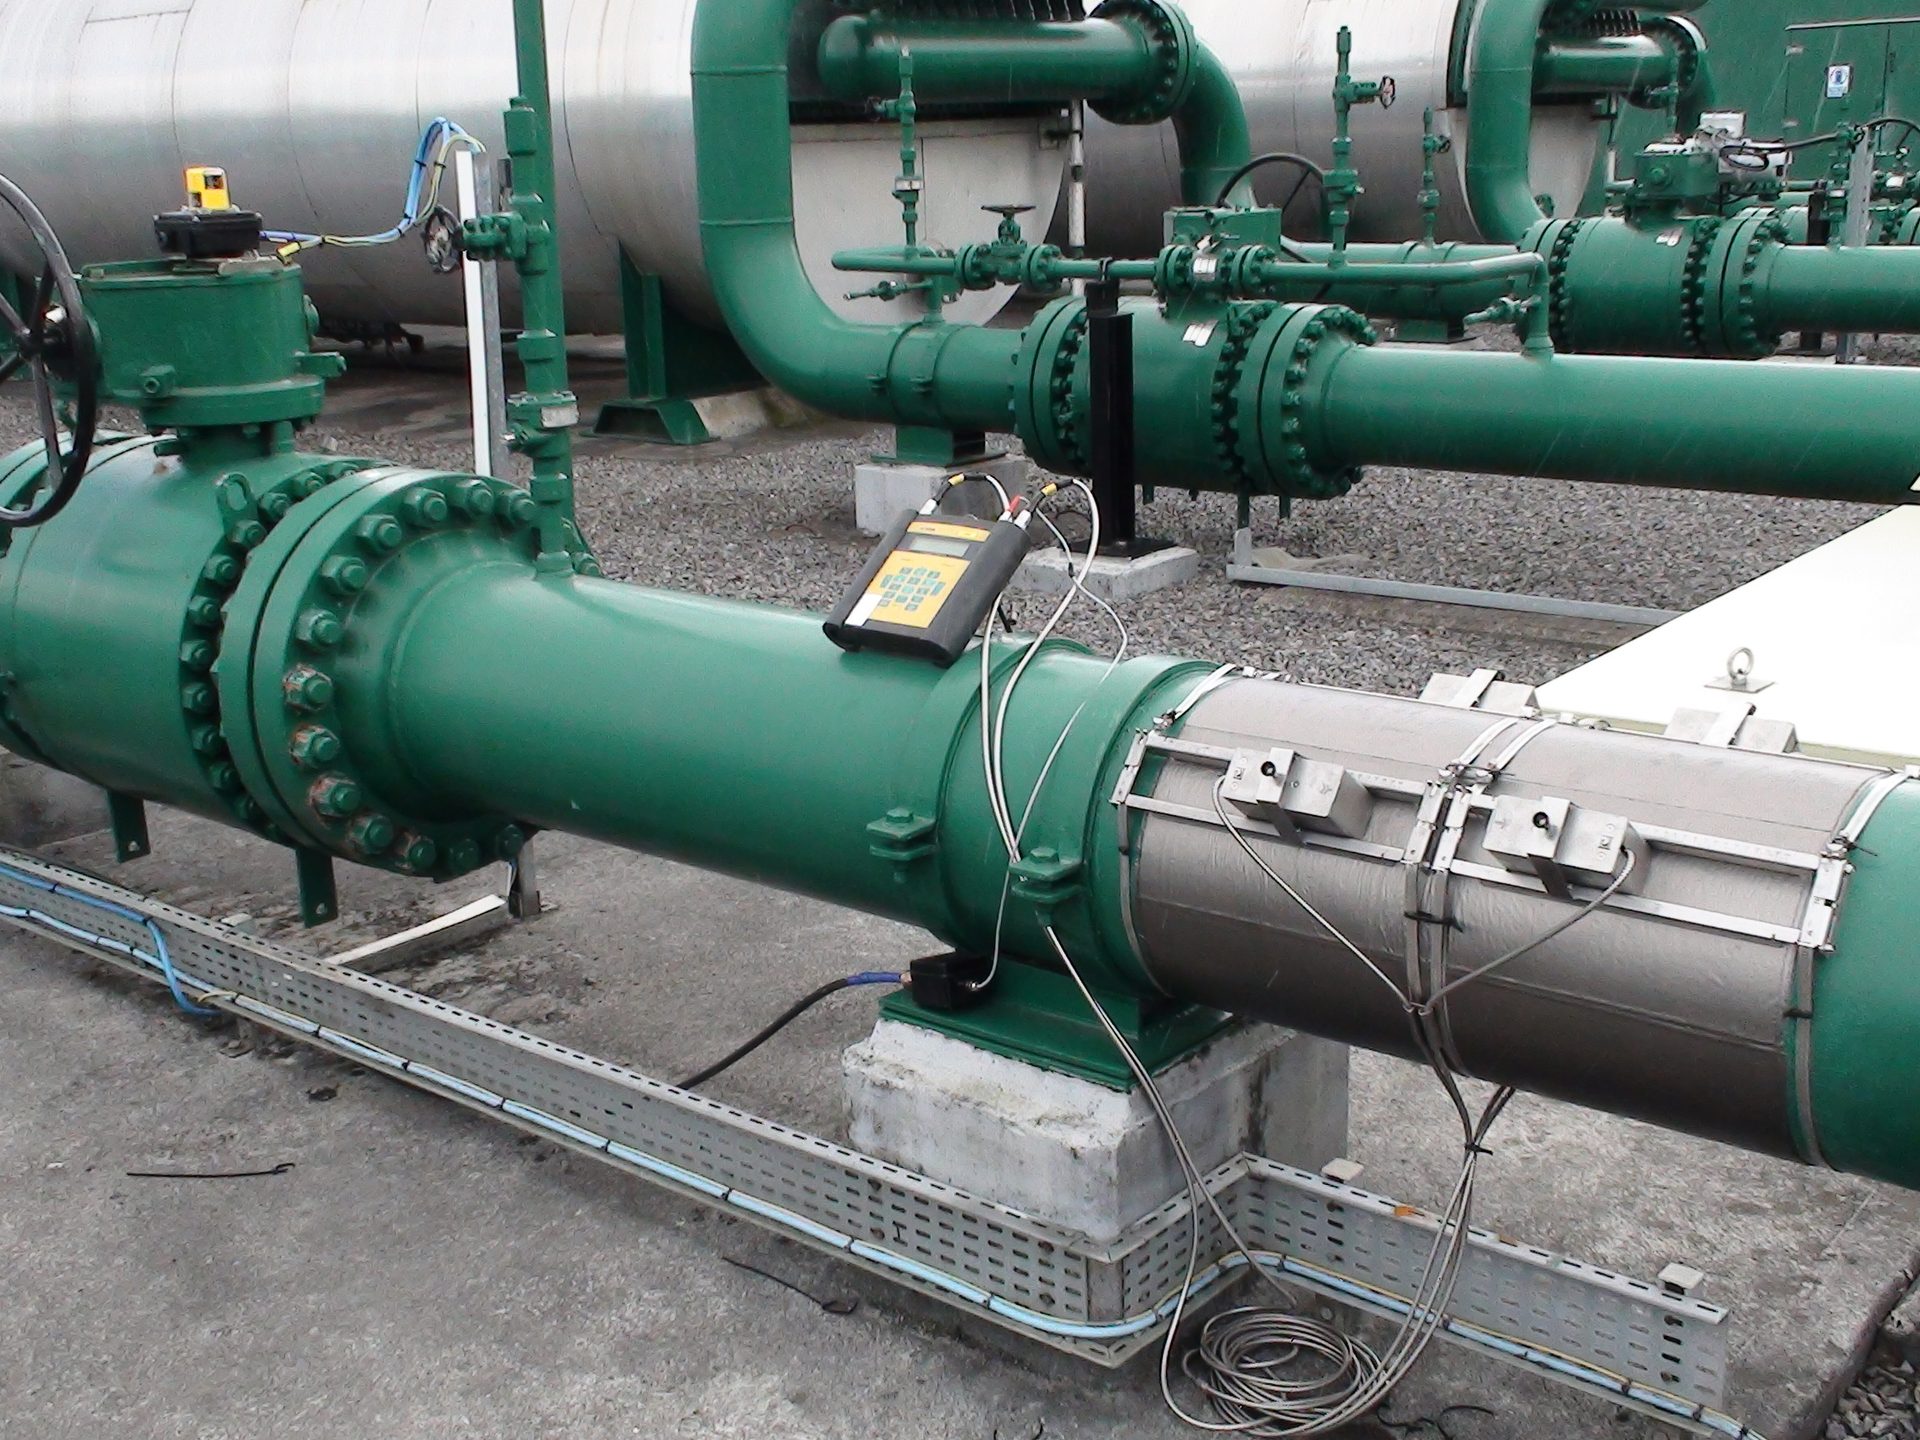 Steel casing pipe, Pipeline transport, Pumping station, Green, Cylinder, Plumbing, Asphalt